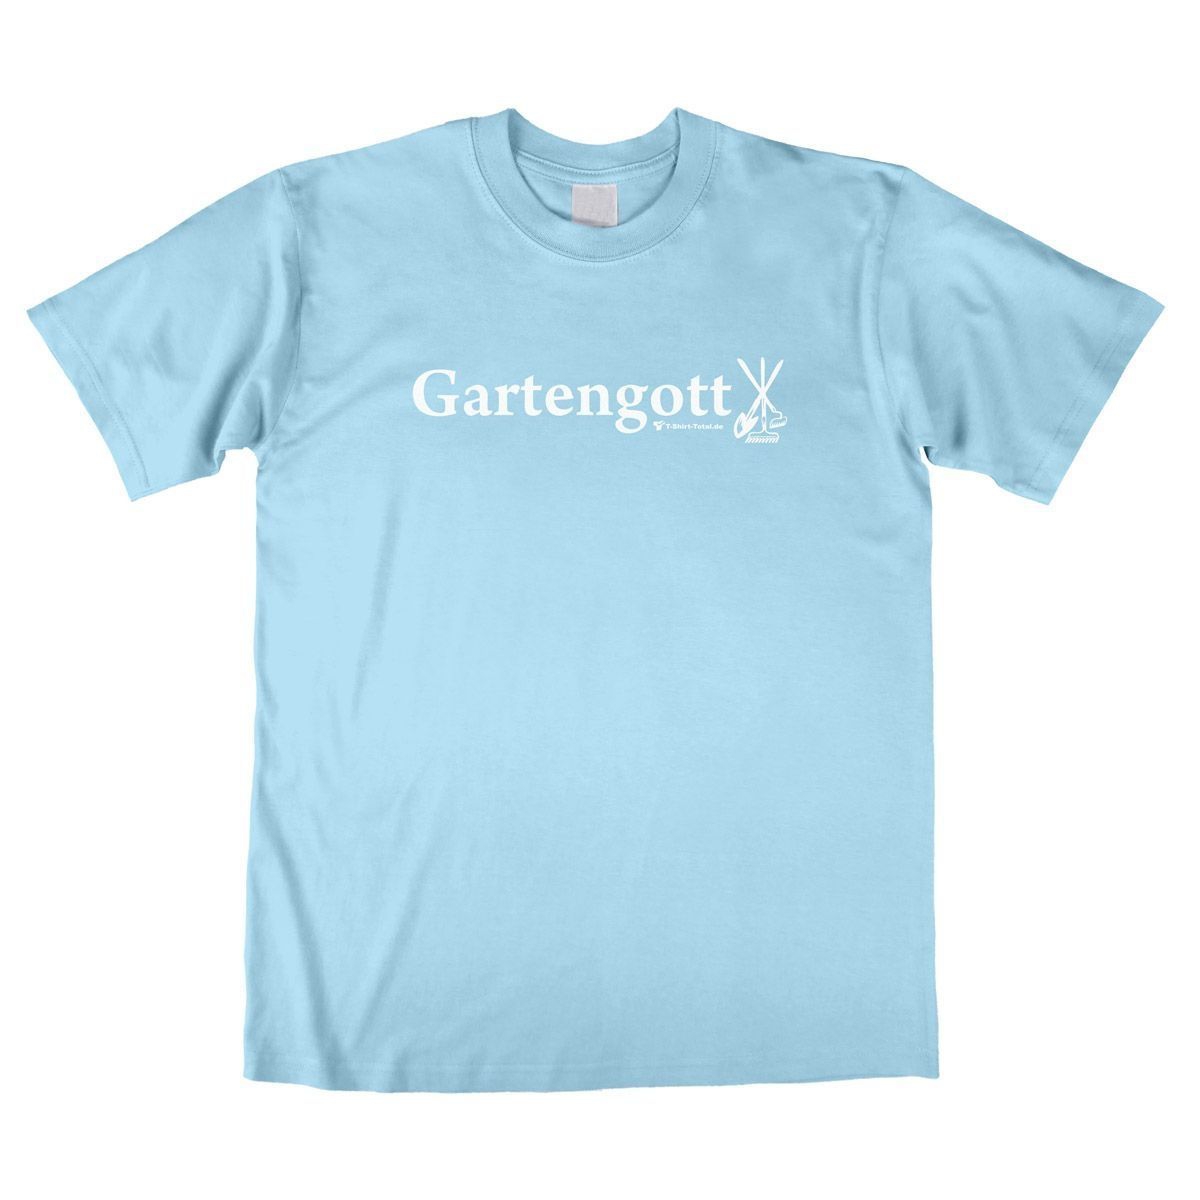 Gartengott Unisex T-Shirt hellblau Extra Large